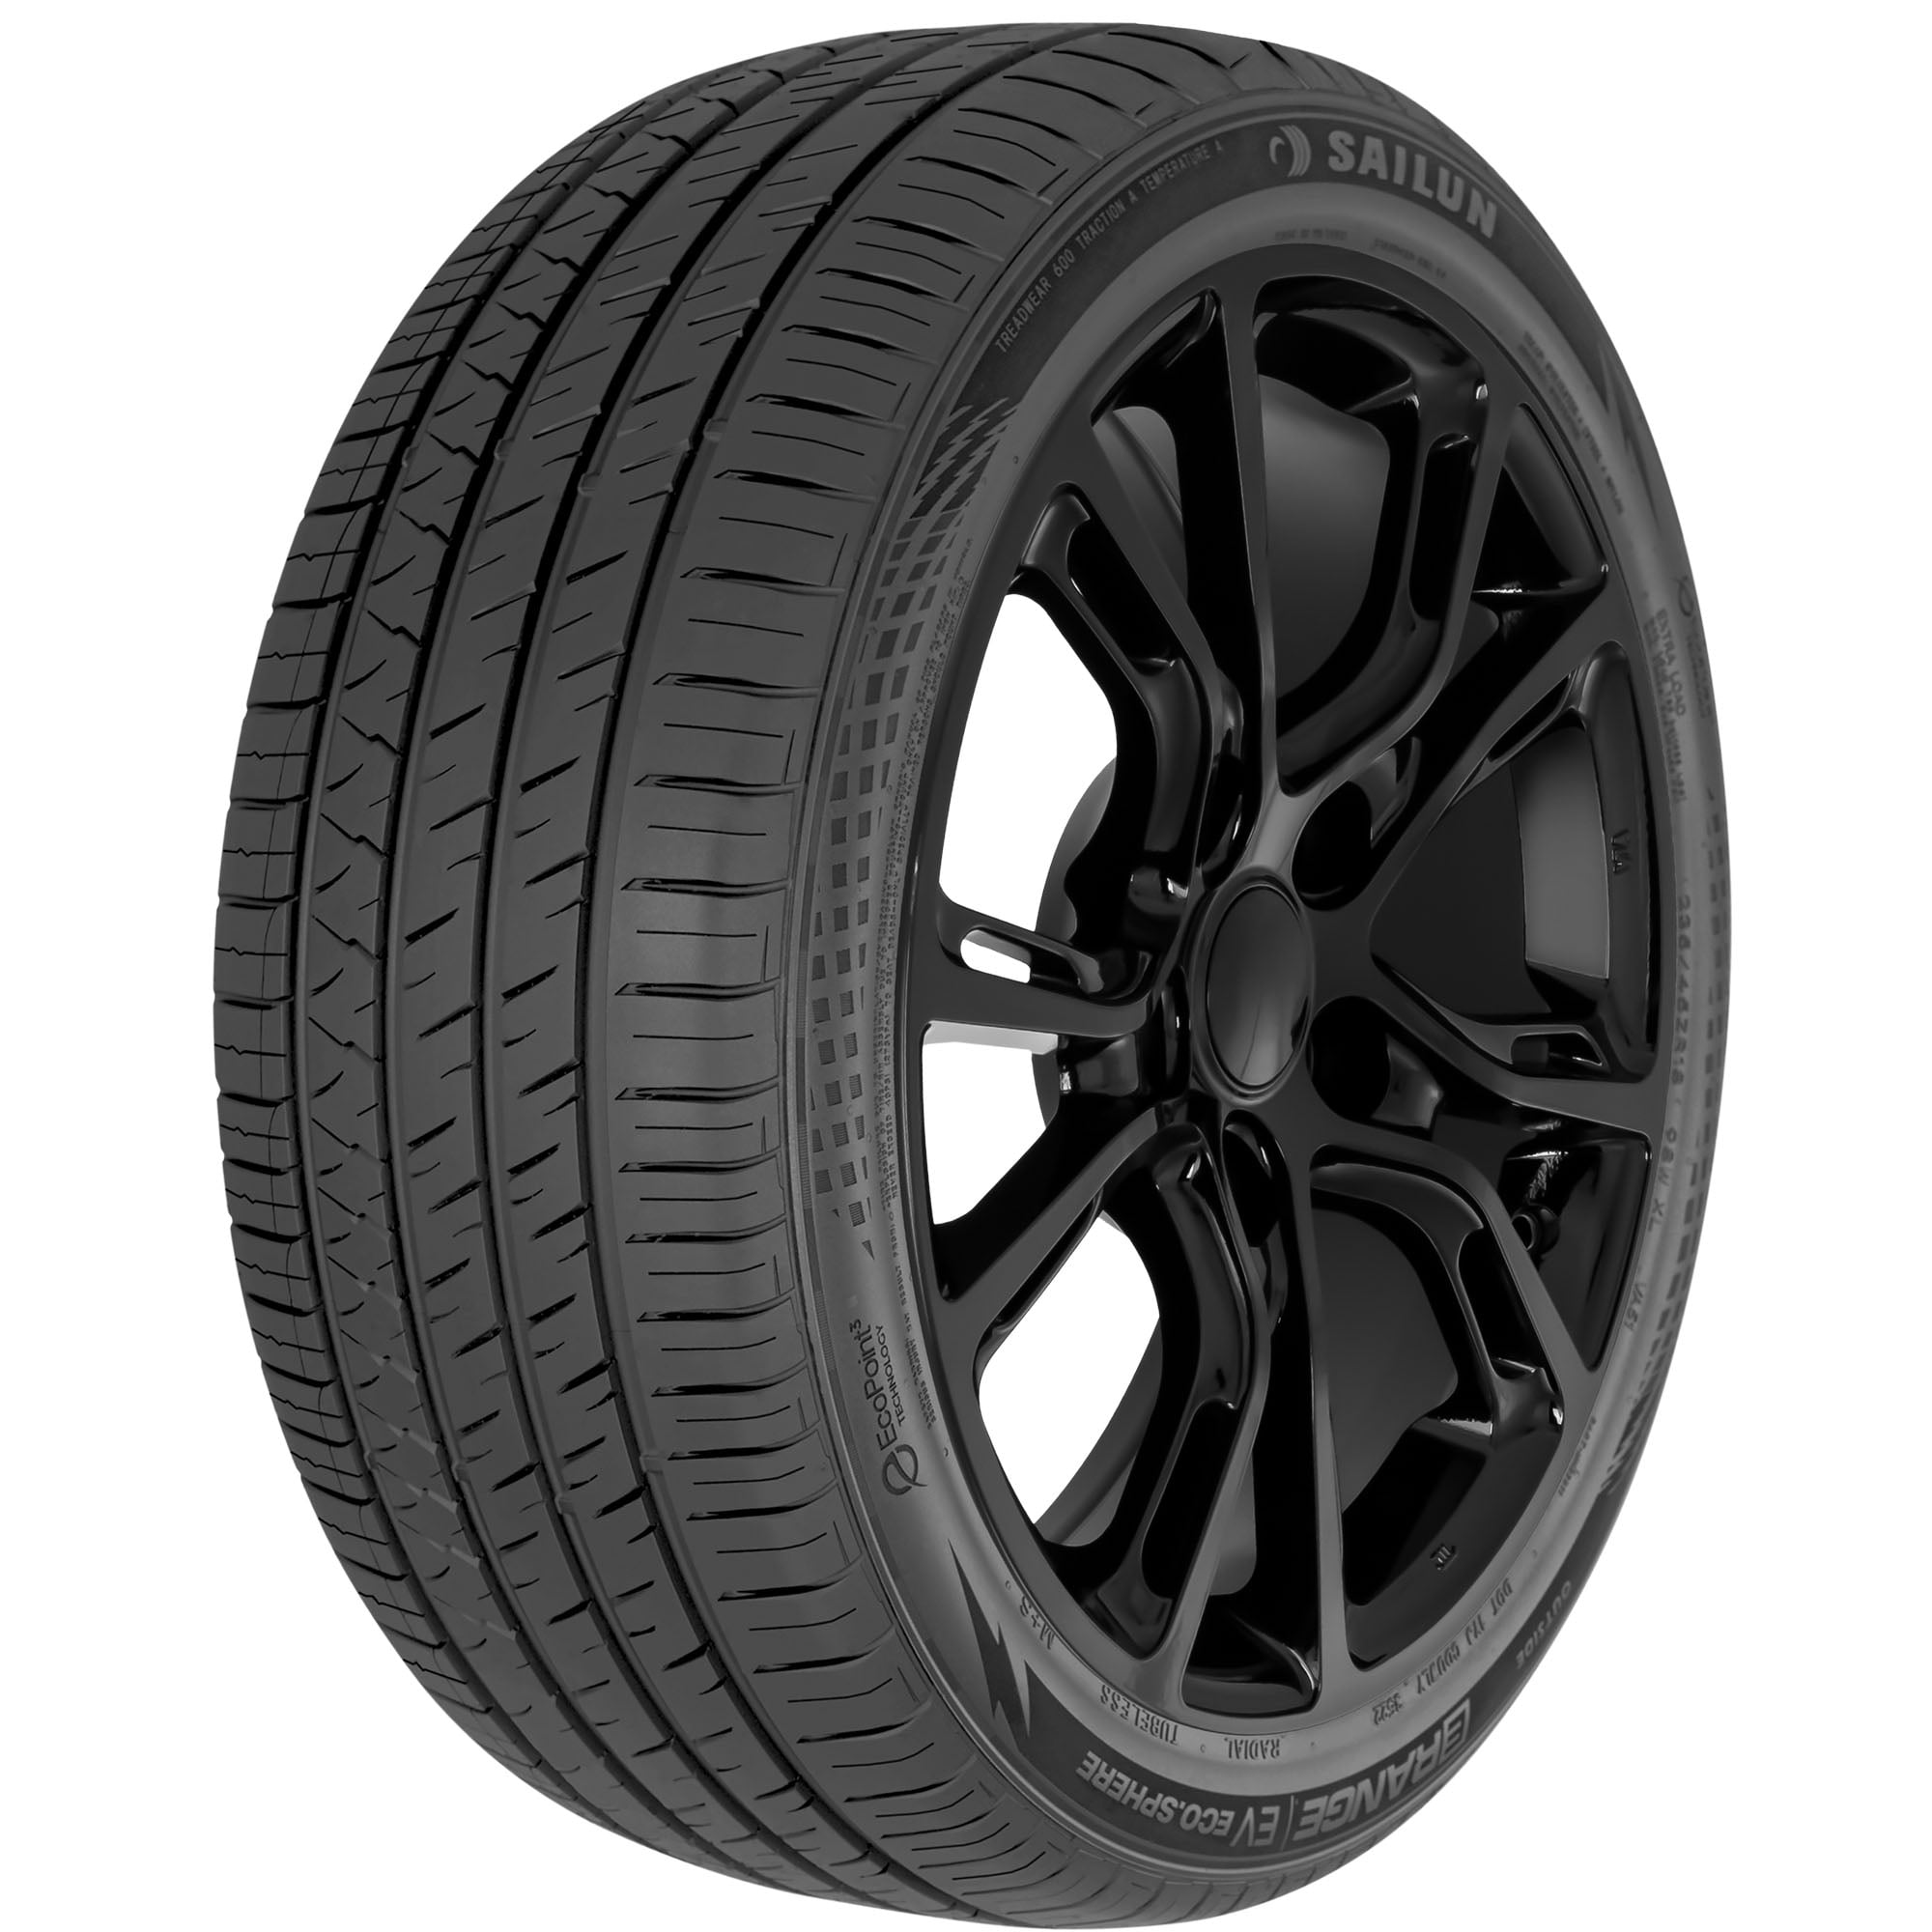 Pirelli P Zero PZ4 265/35R21XL 101Y BSW (4 Tires) Fits: 2021-22 Tesla S  Plaid, 2019 Audi A8 Quattro L